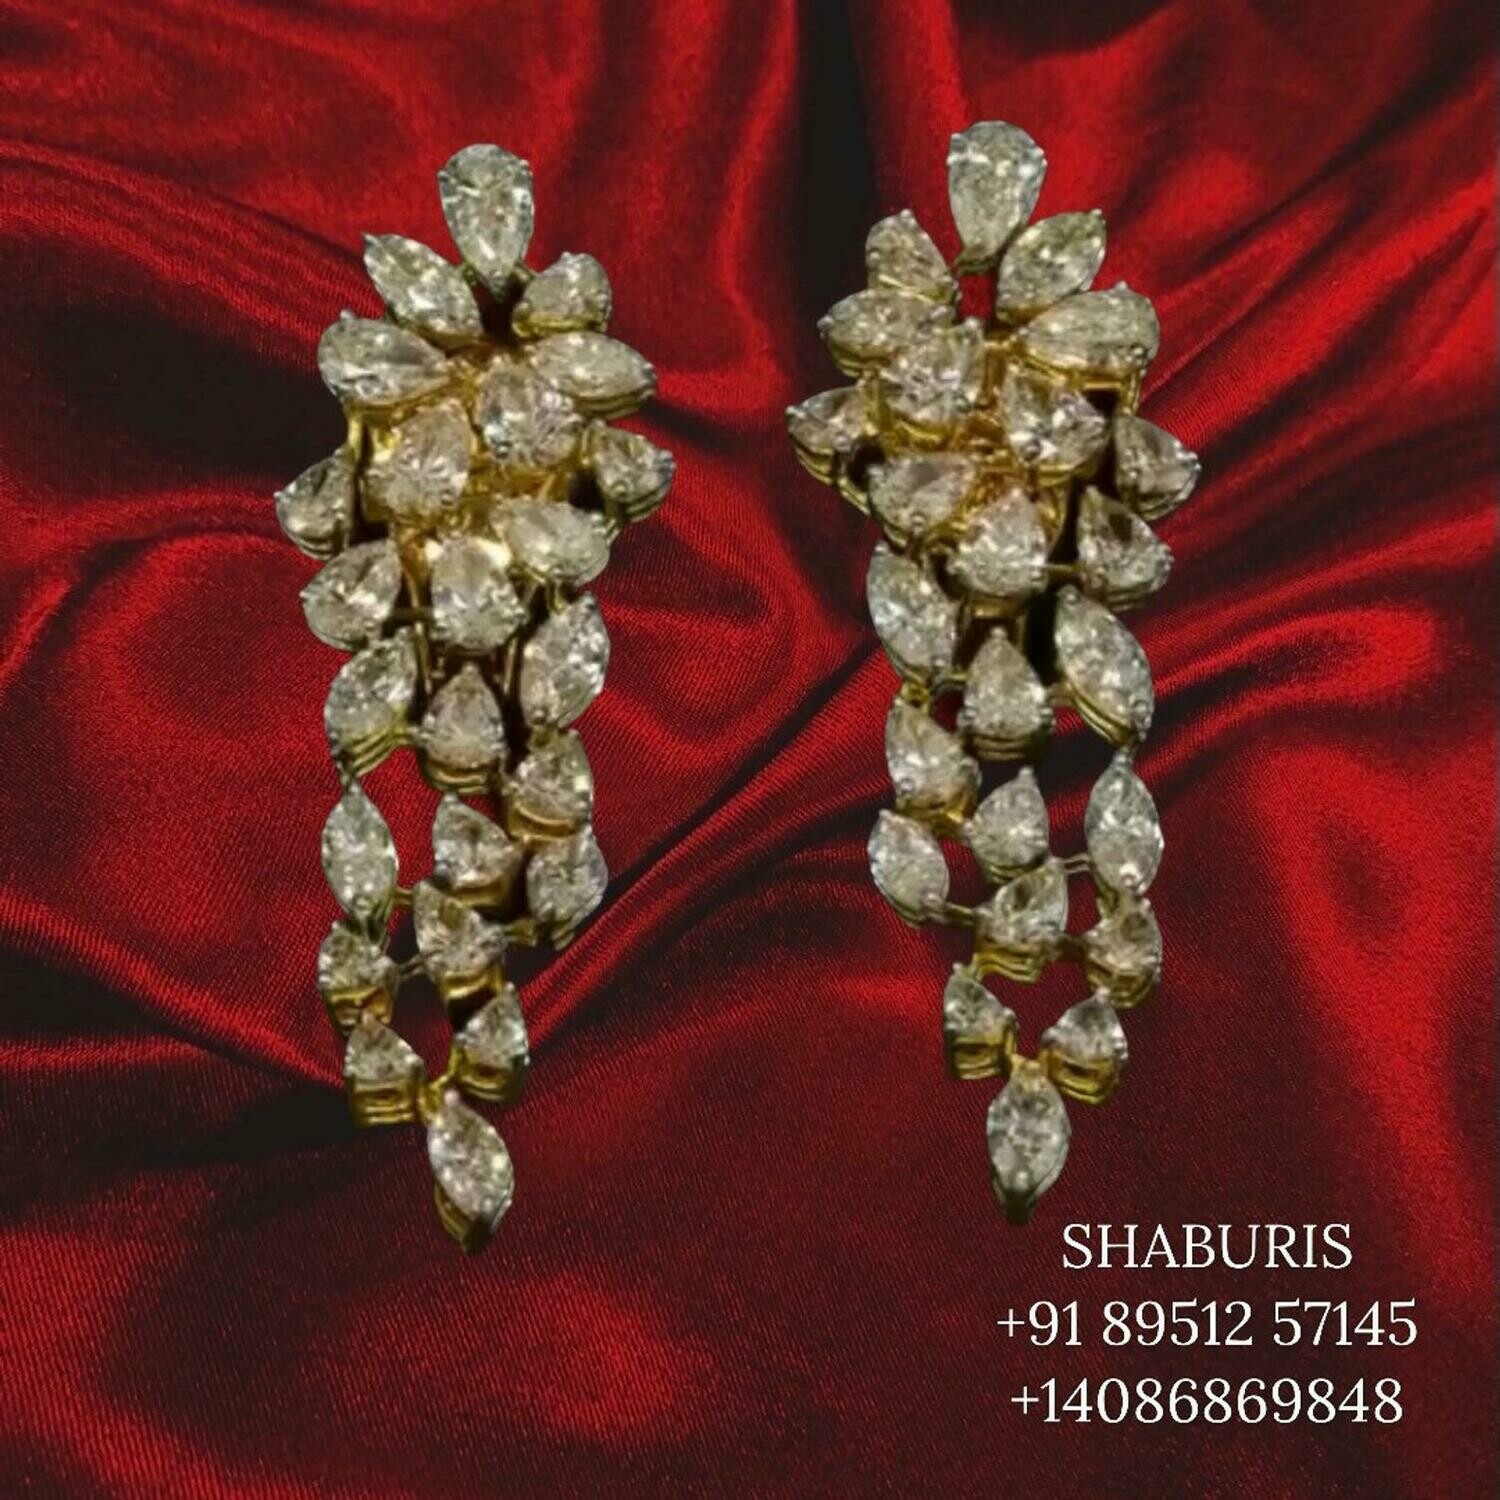 Diamond earrings polki jewelry moissanite jewelry indian gold jewelry designs diamond jhumkas pure silver jewelry celebrity jewelry-SHABURIS